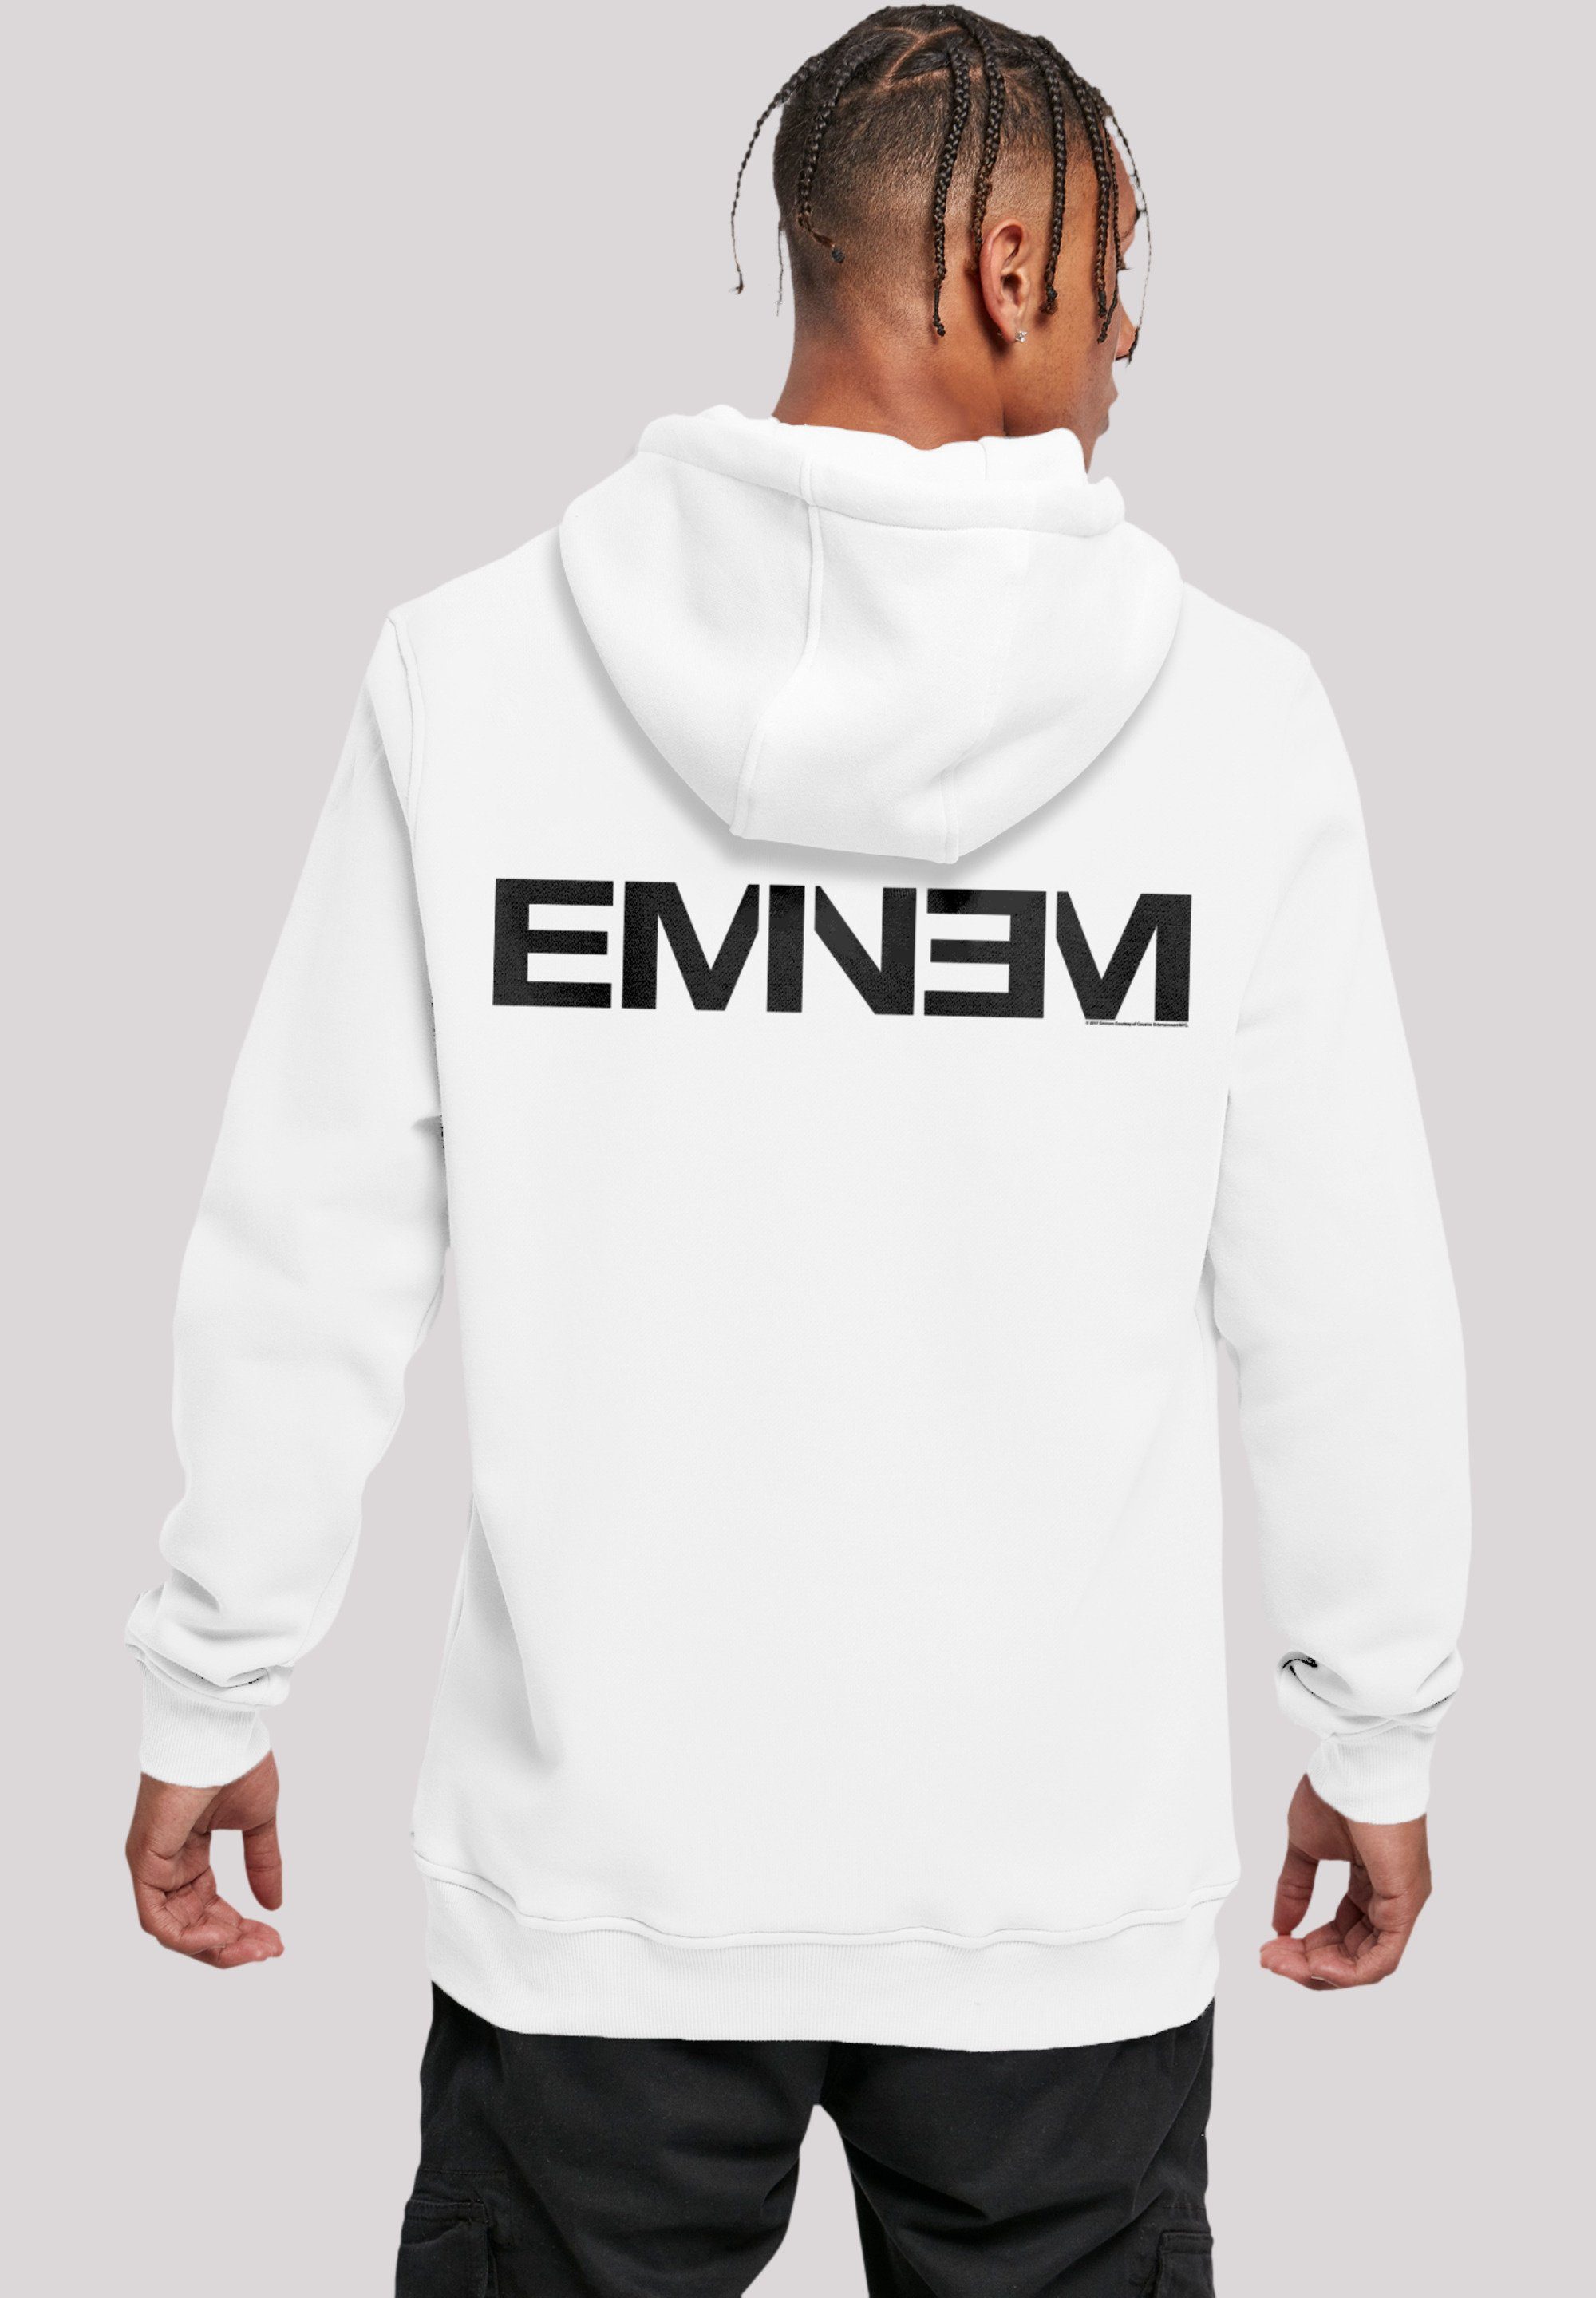 Logo Premium F4NT4STIC Qualität, Eminem Band, Rap Hoodie Music weiß